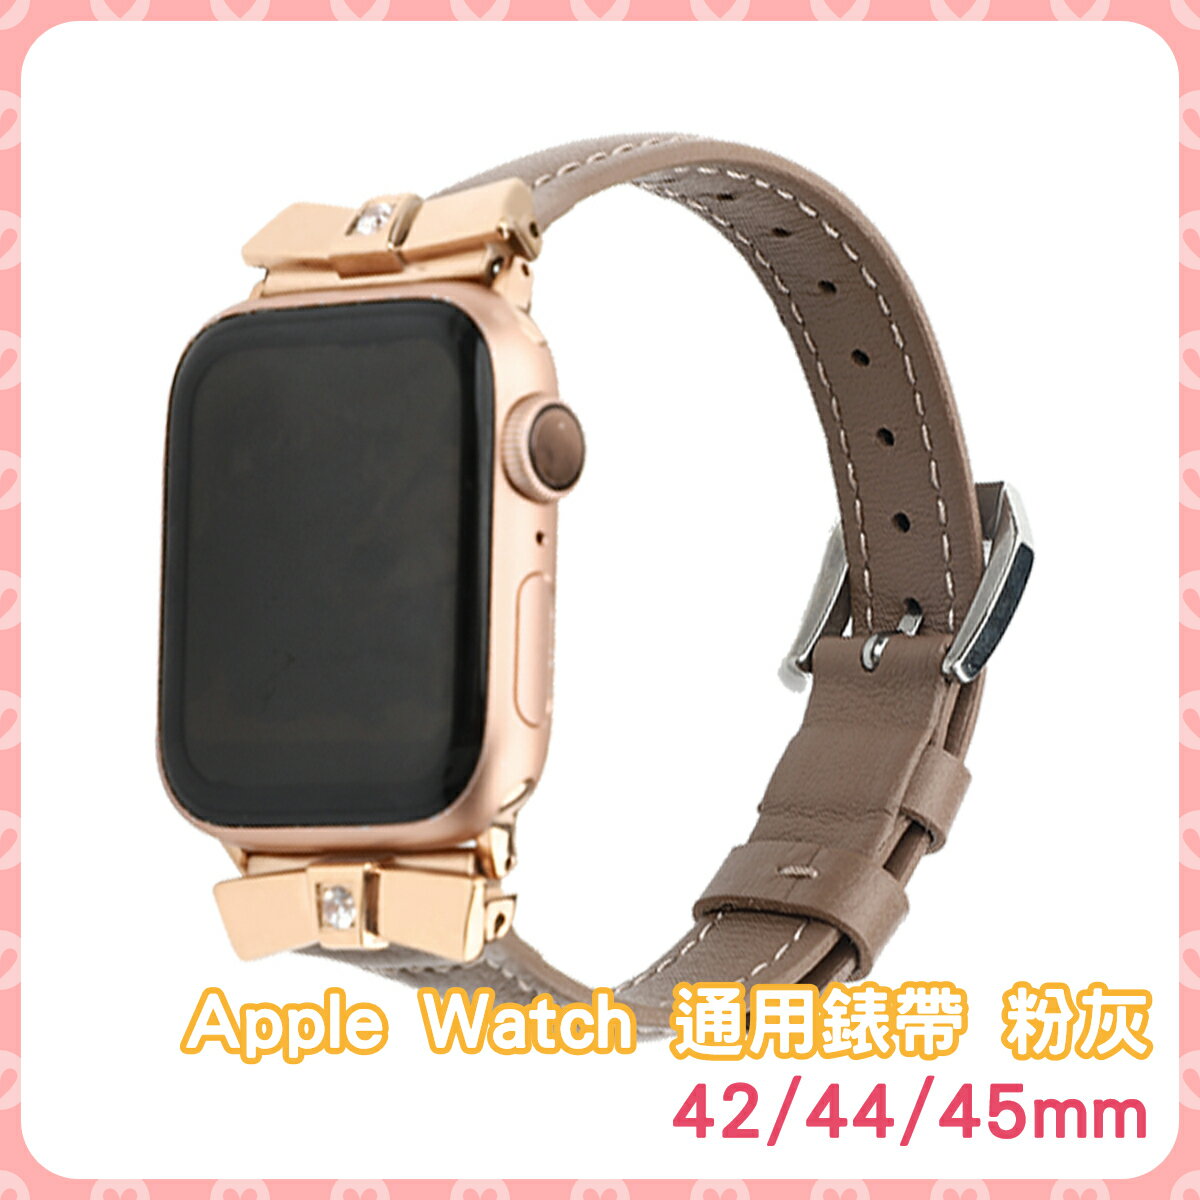 Apple Watch 通用錶帶 粉灰 42/44/45mm